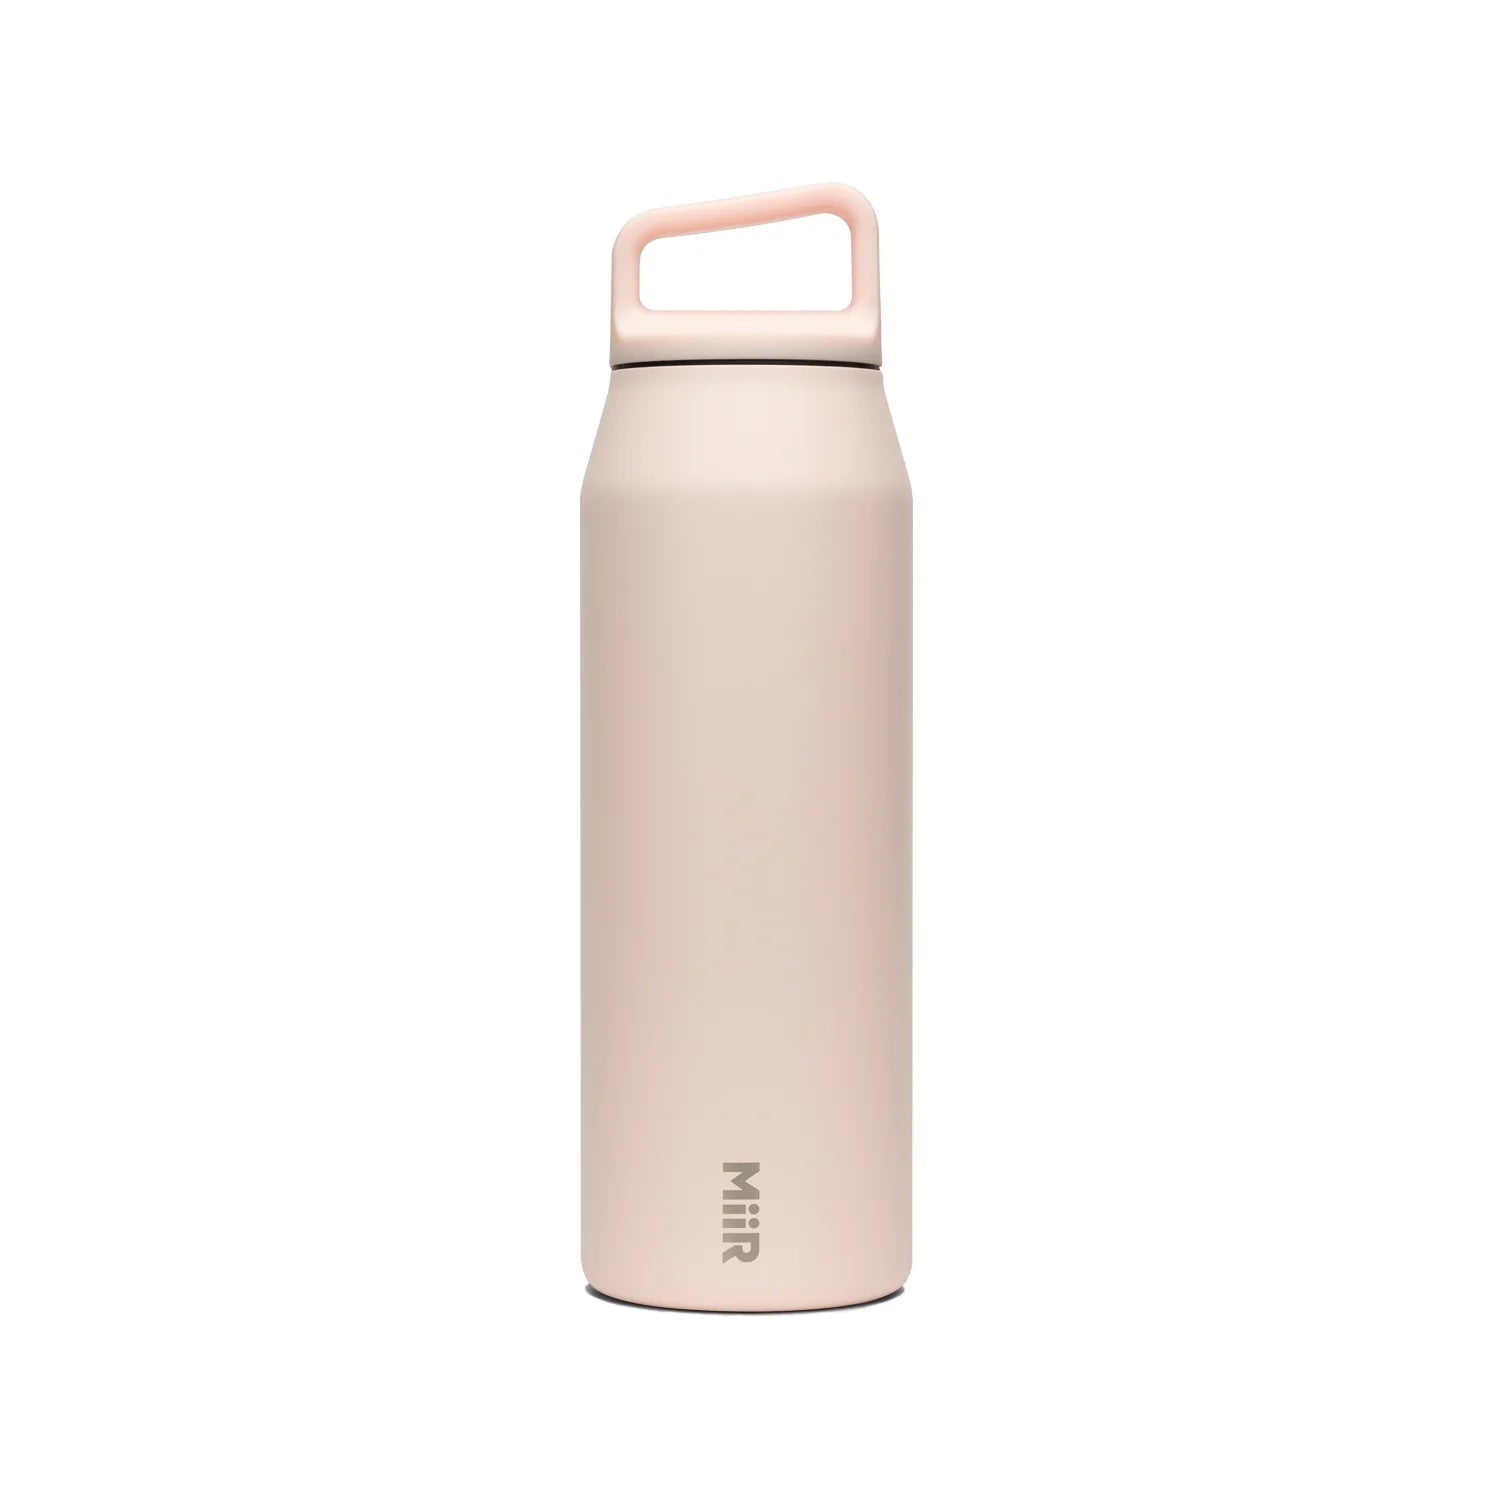 A pink MIIR water bottle.